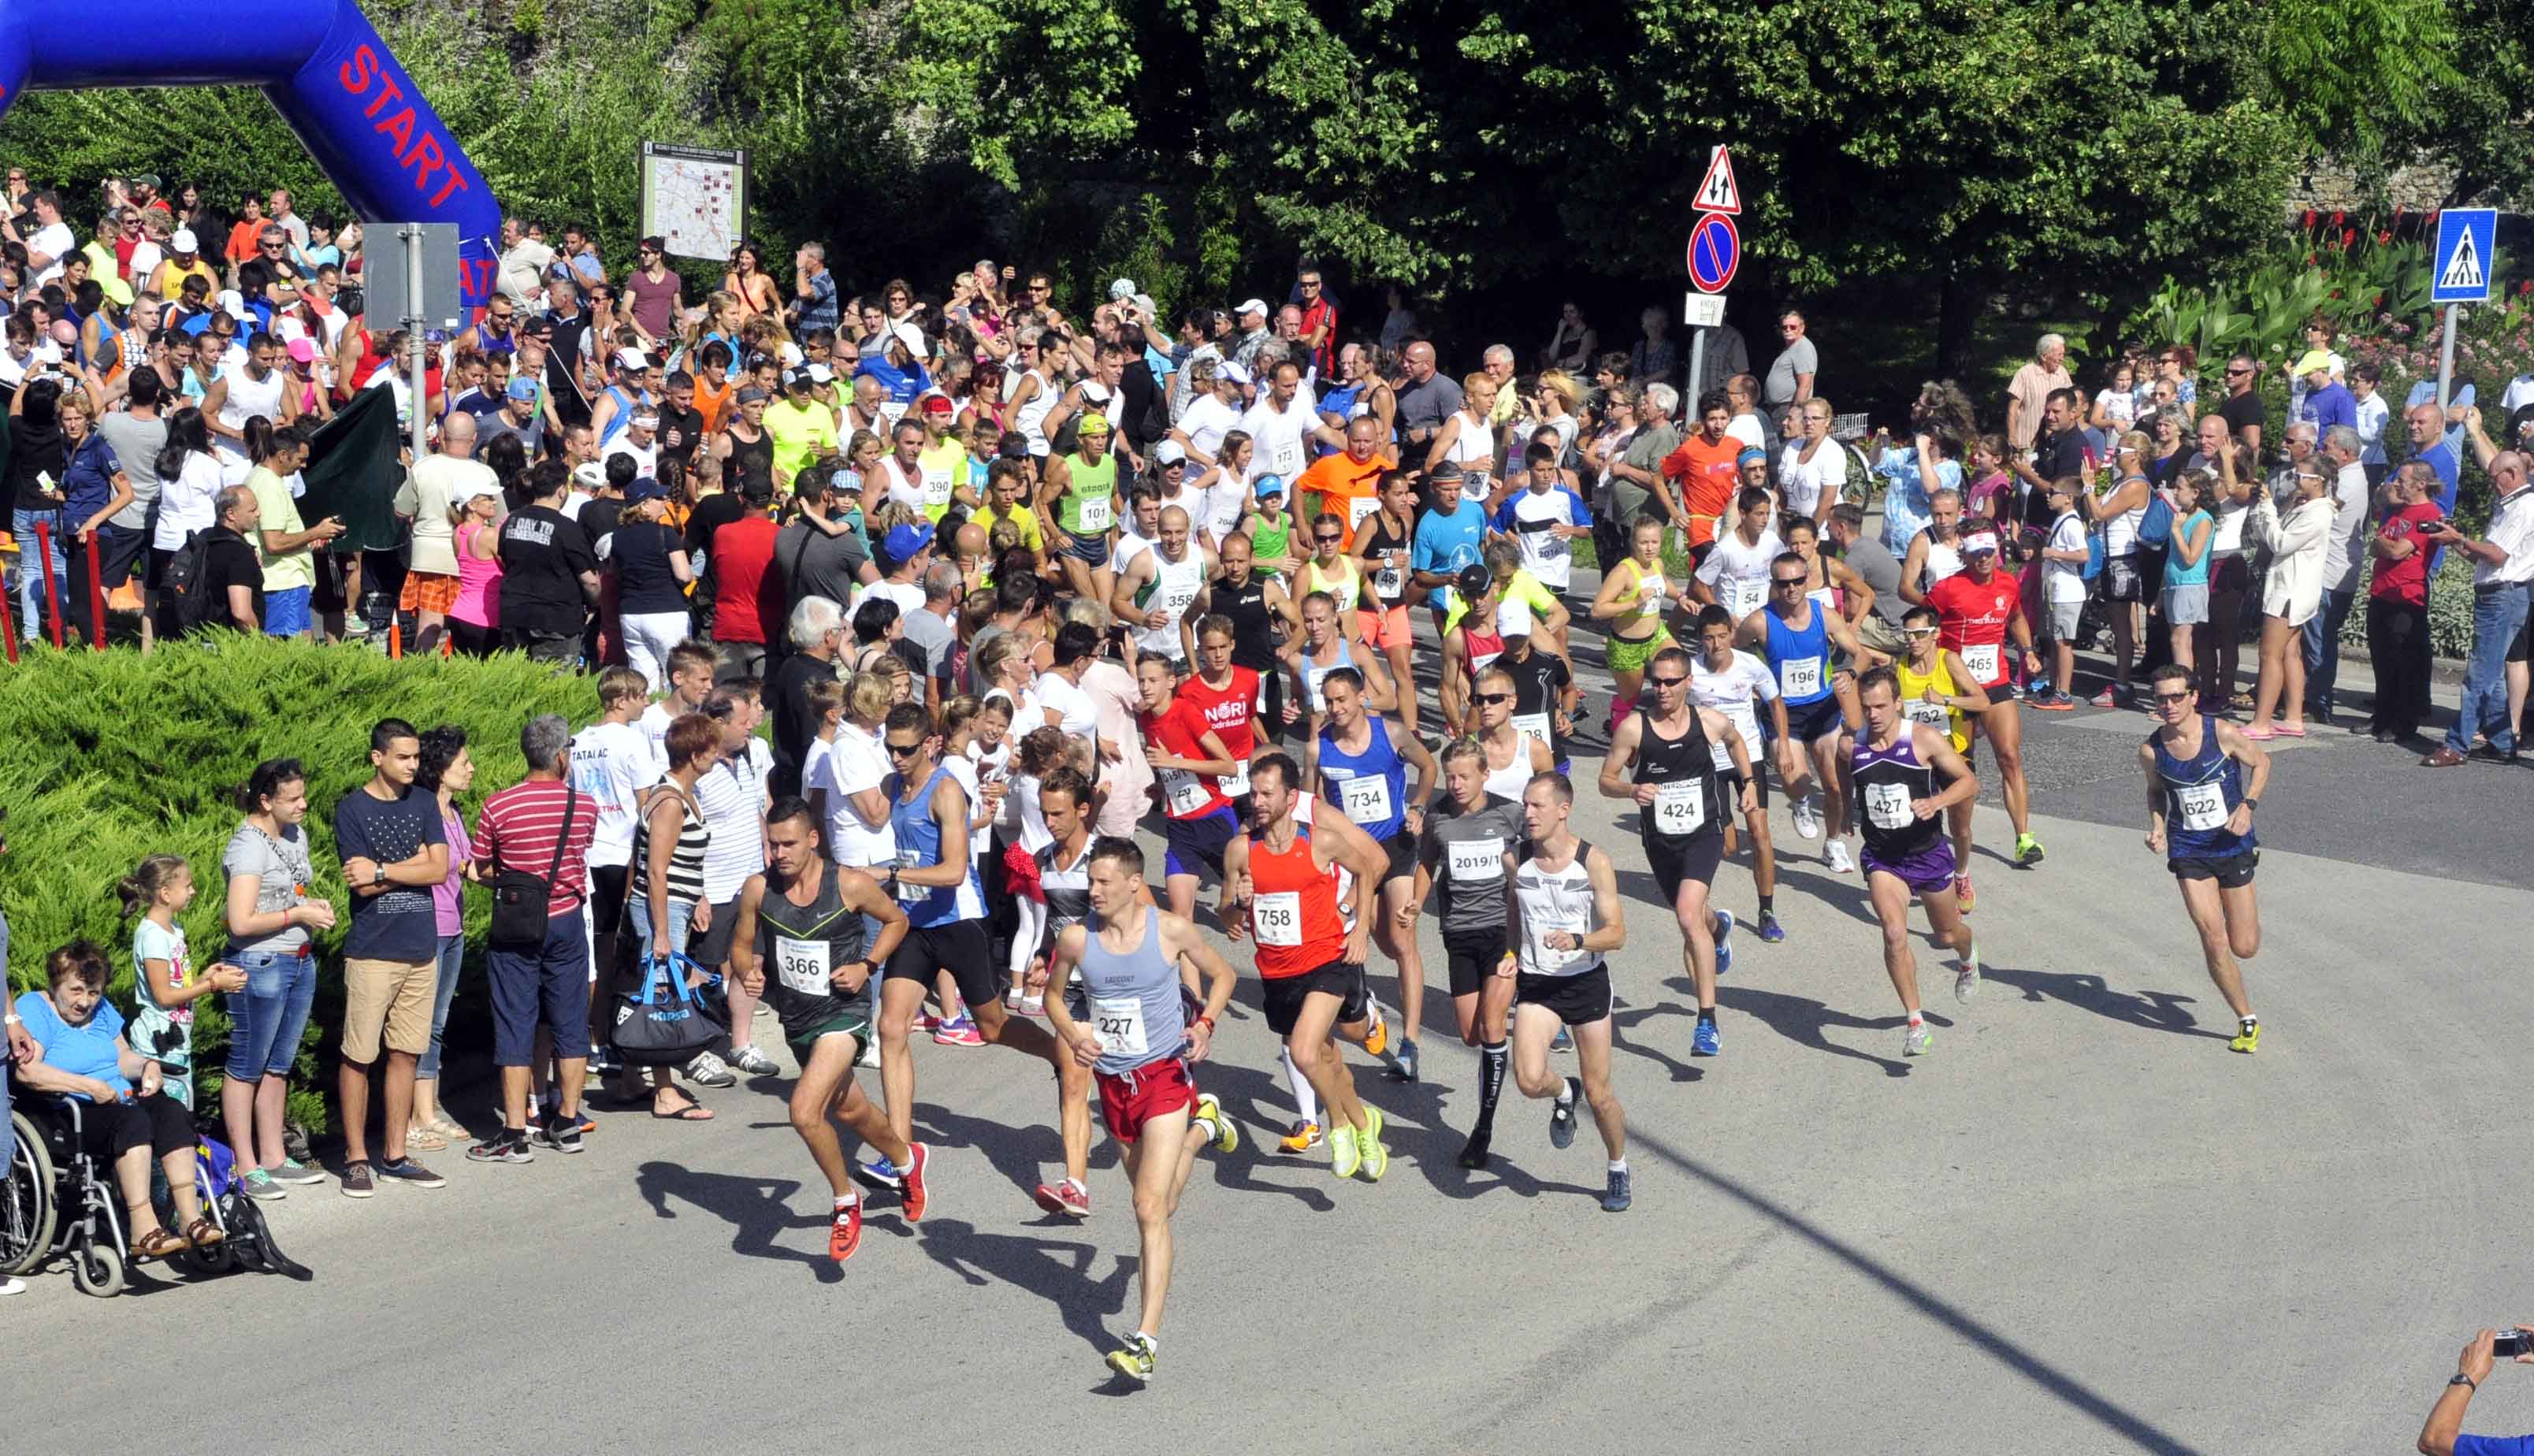 951 induló a 2016-os Minimaratonon